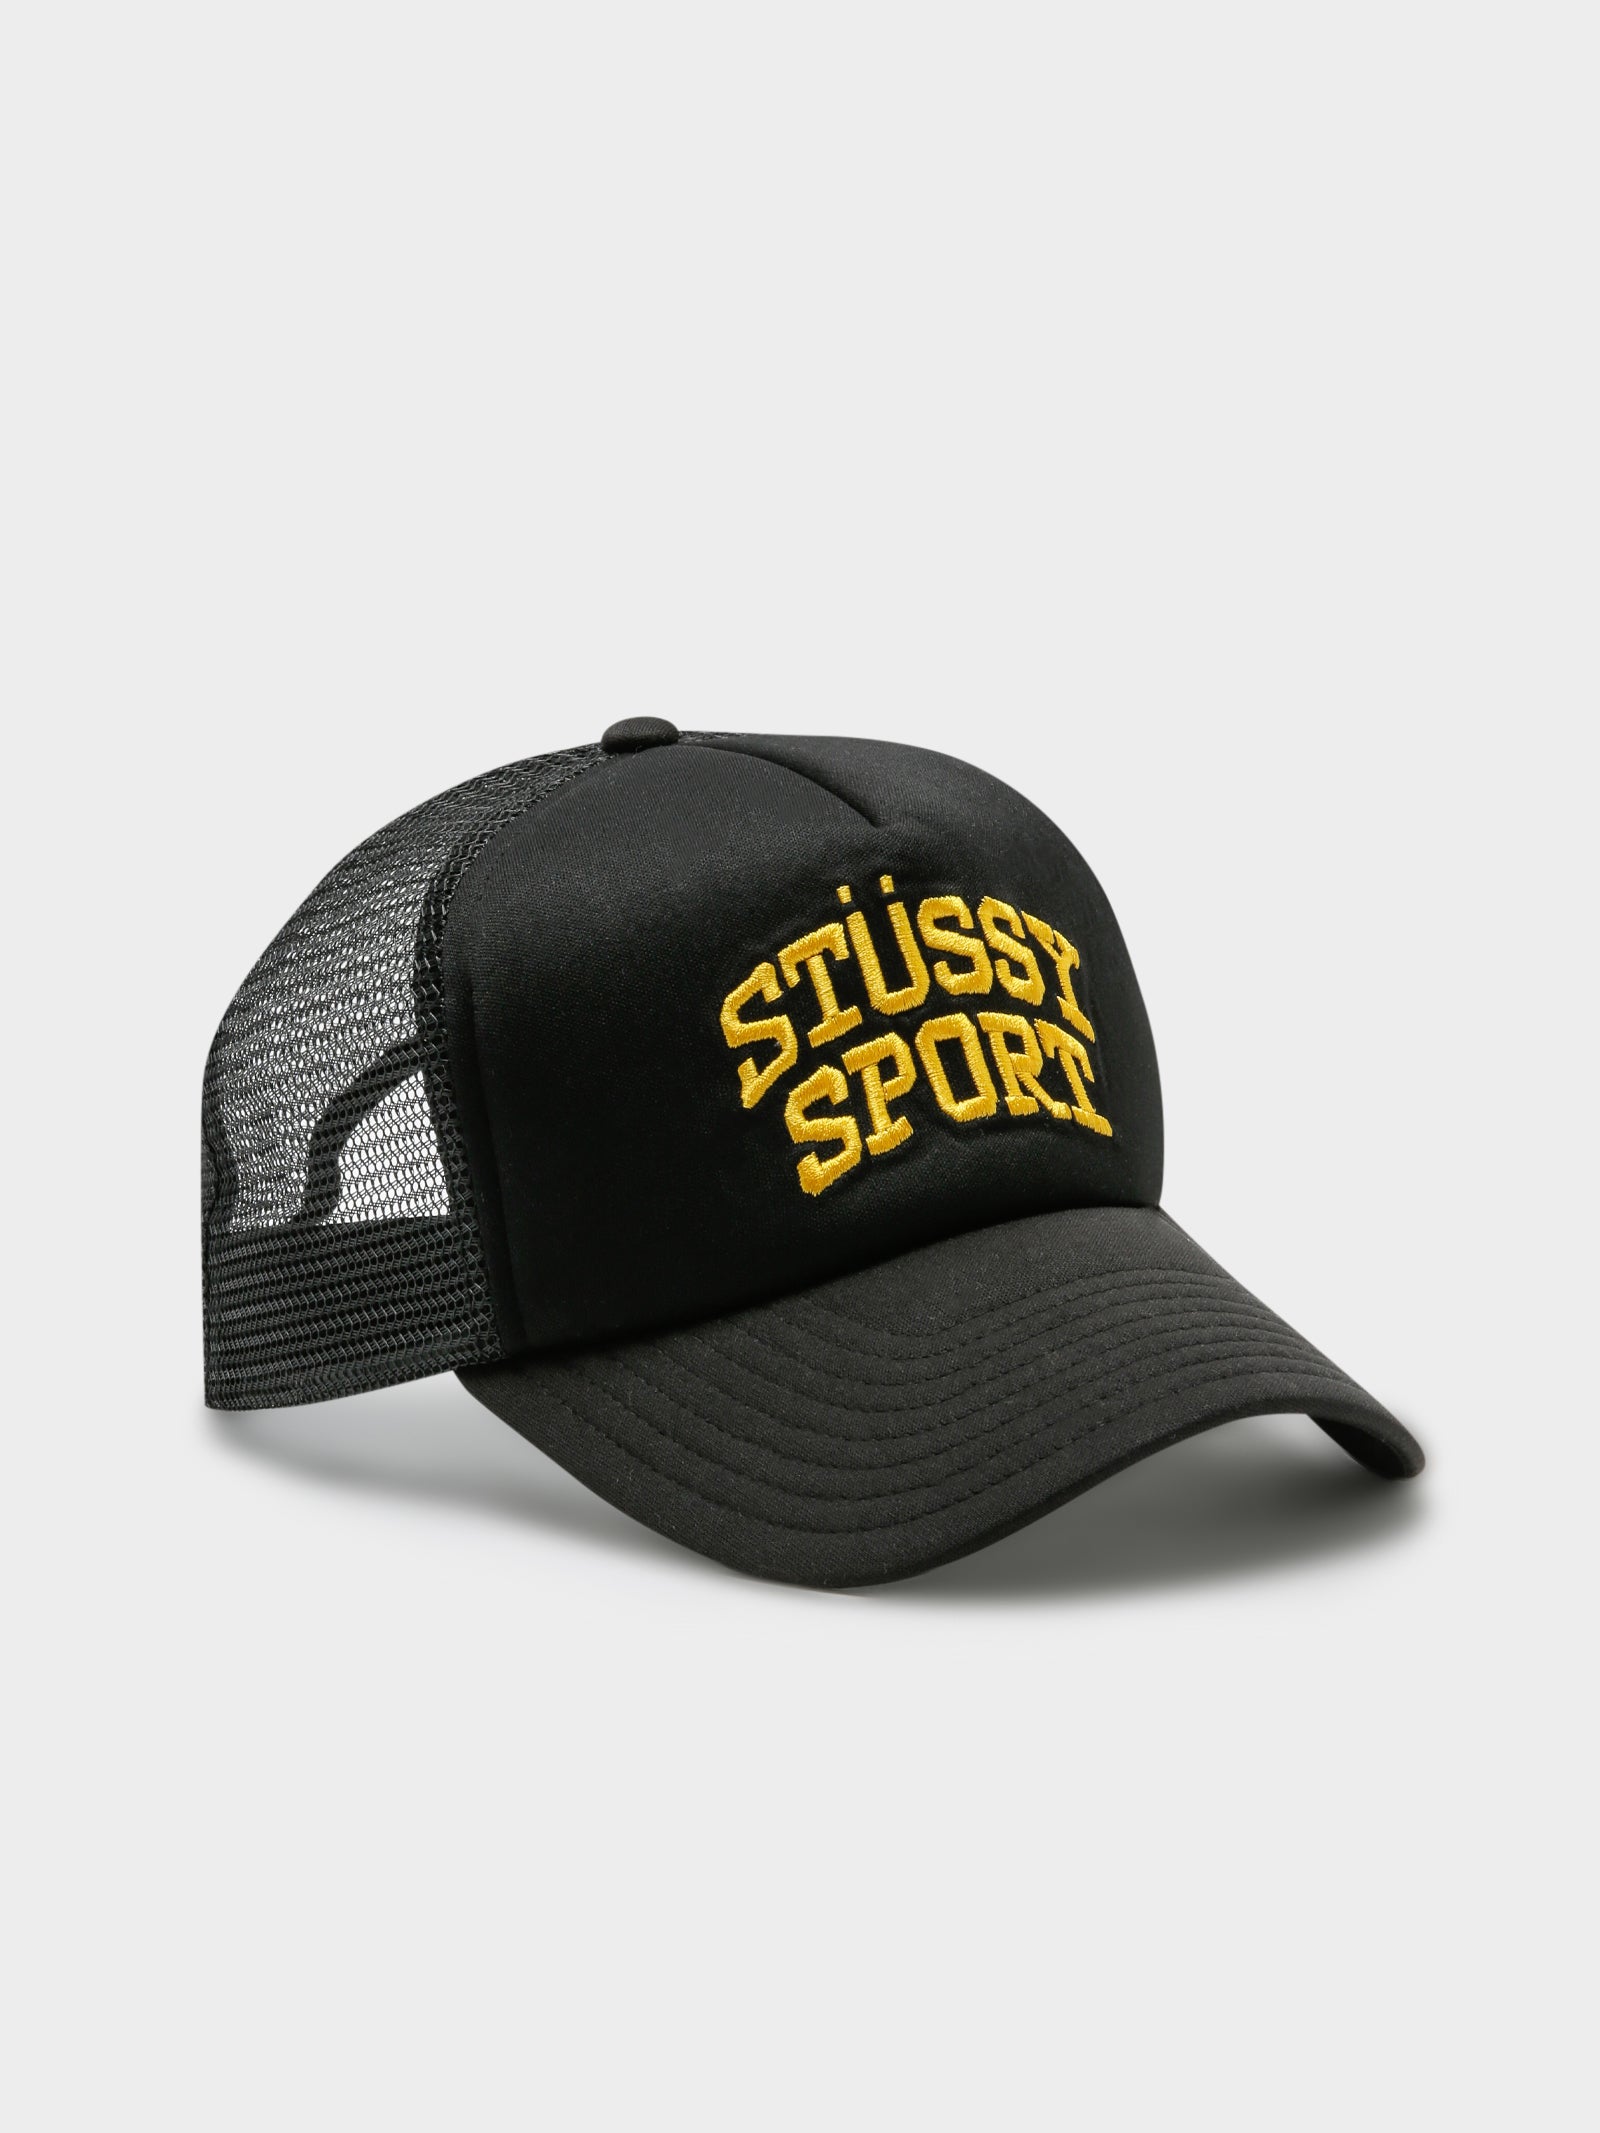 Stussy Sport Trucker Cap in Black - Glue Store